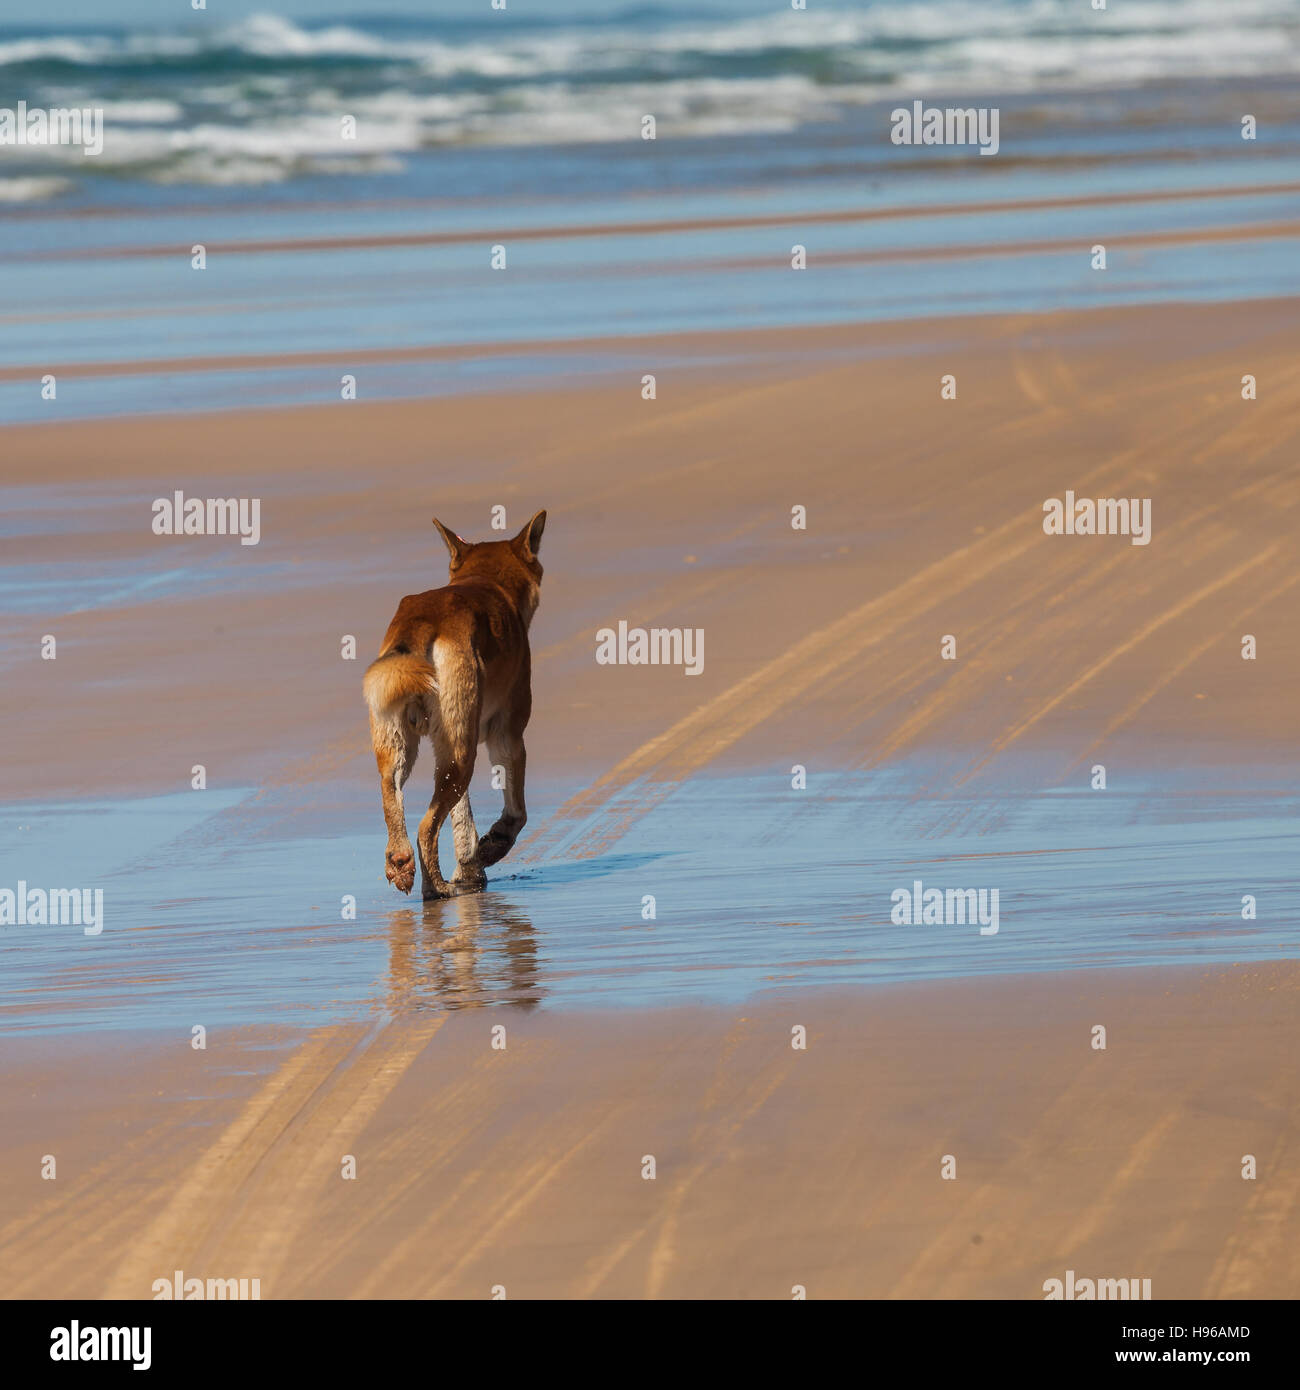 dingo is a wild dog found in Australia. endangered Stock Photo